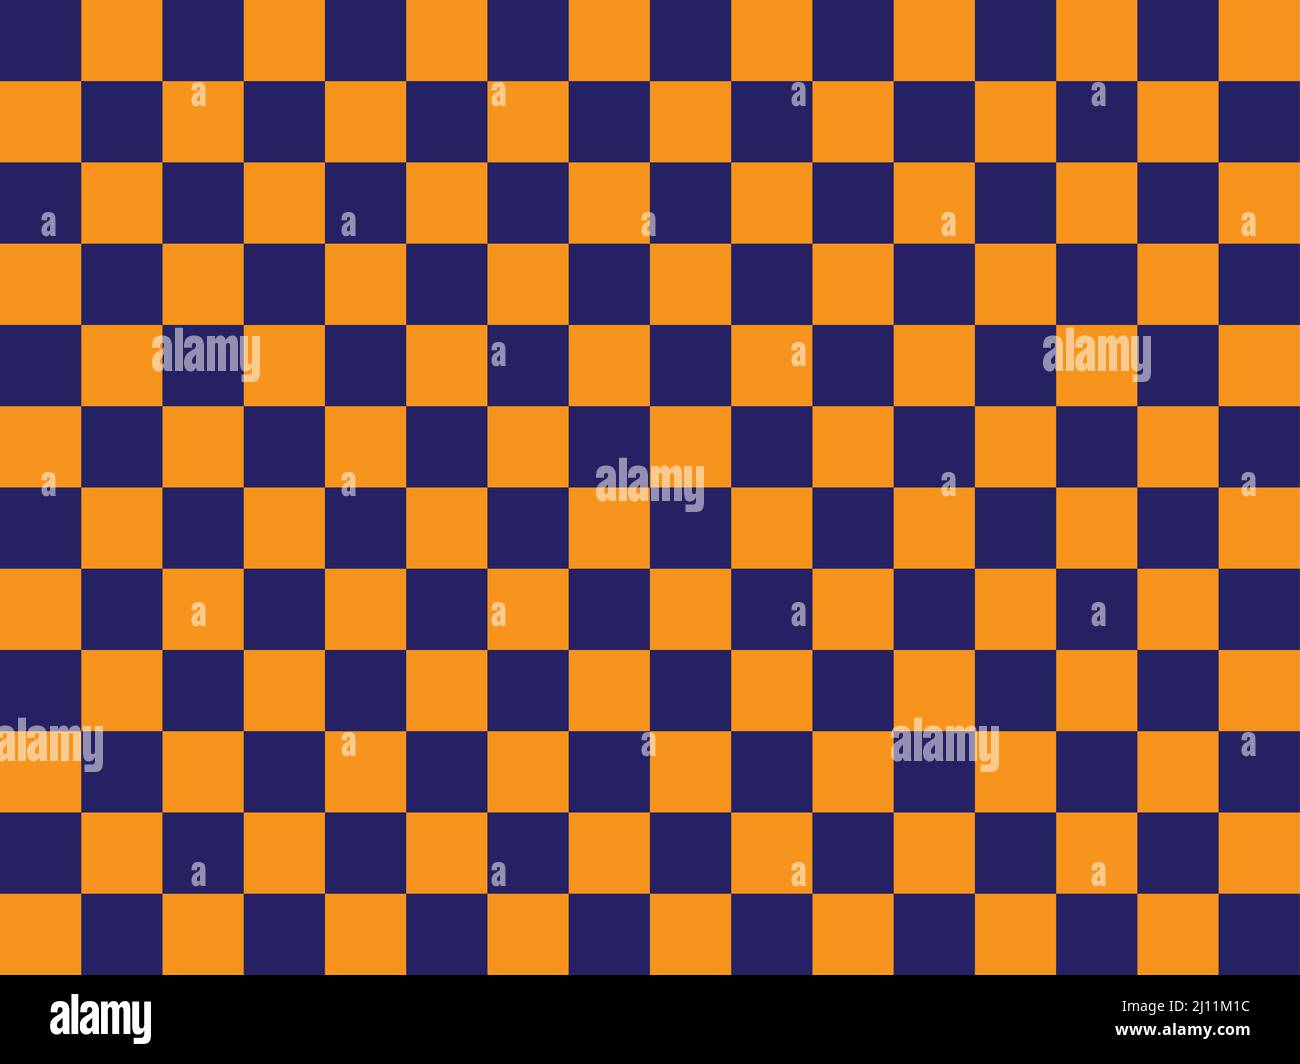 https://c8.alamy.com/comp/2J11M1C/dark-blue-and-orange-color-checkered-abstract-background-pattern-2J11M1C.jpg